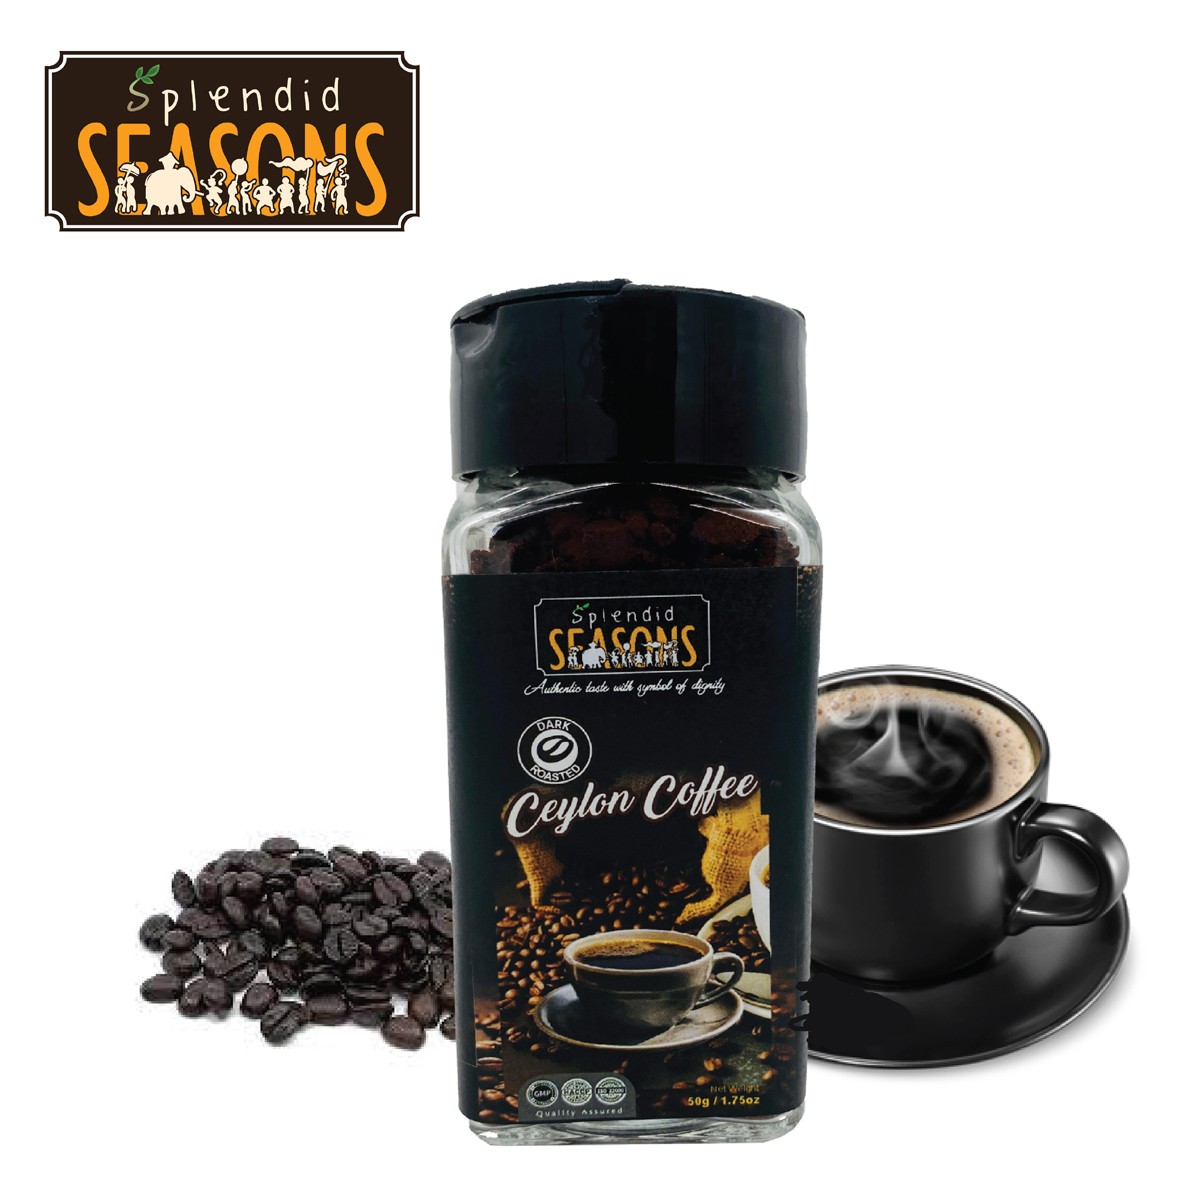 Dark Roasted Ceylon Coffee - Black Coffee - 50g